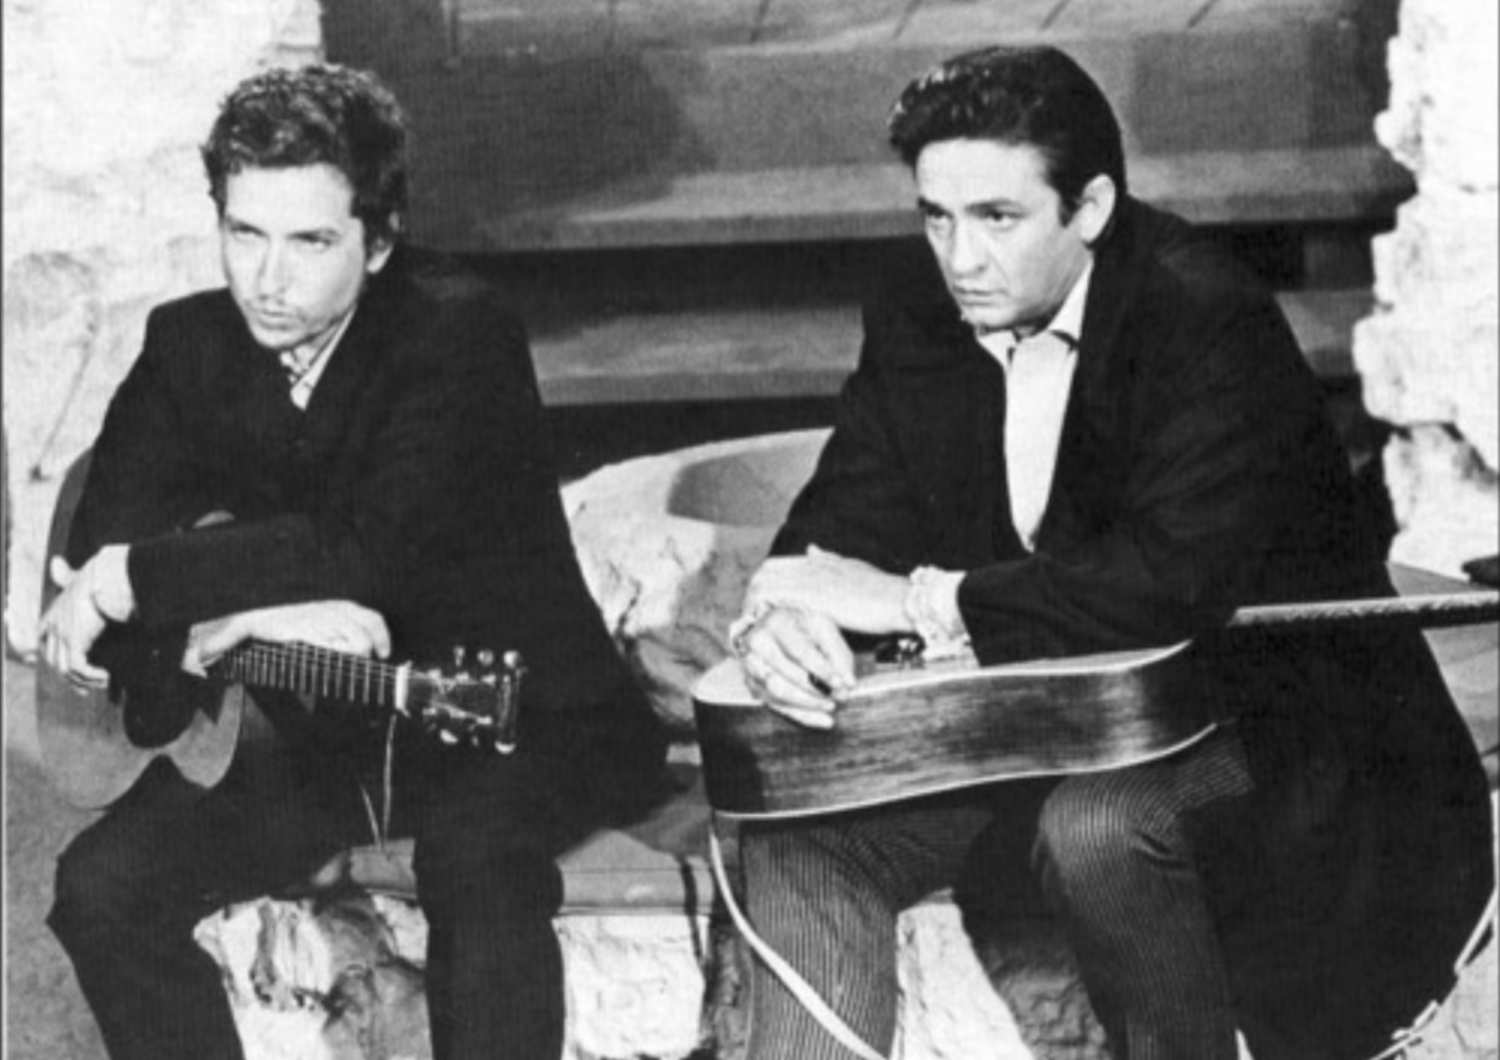 Bob Dylan e Johnny Cash